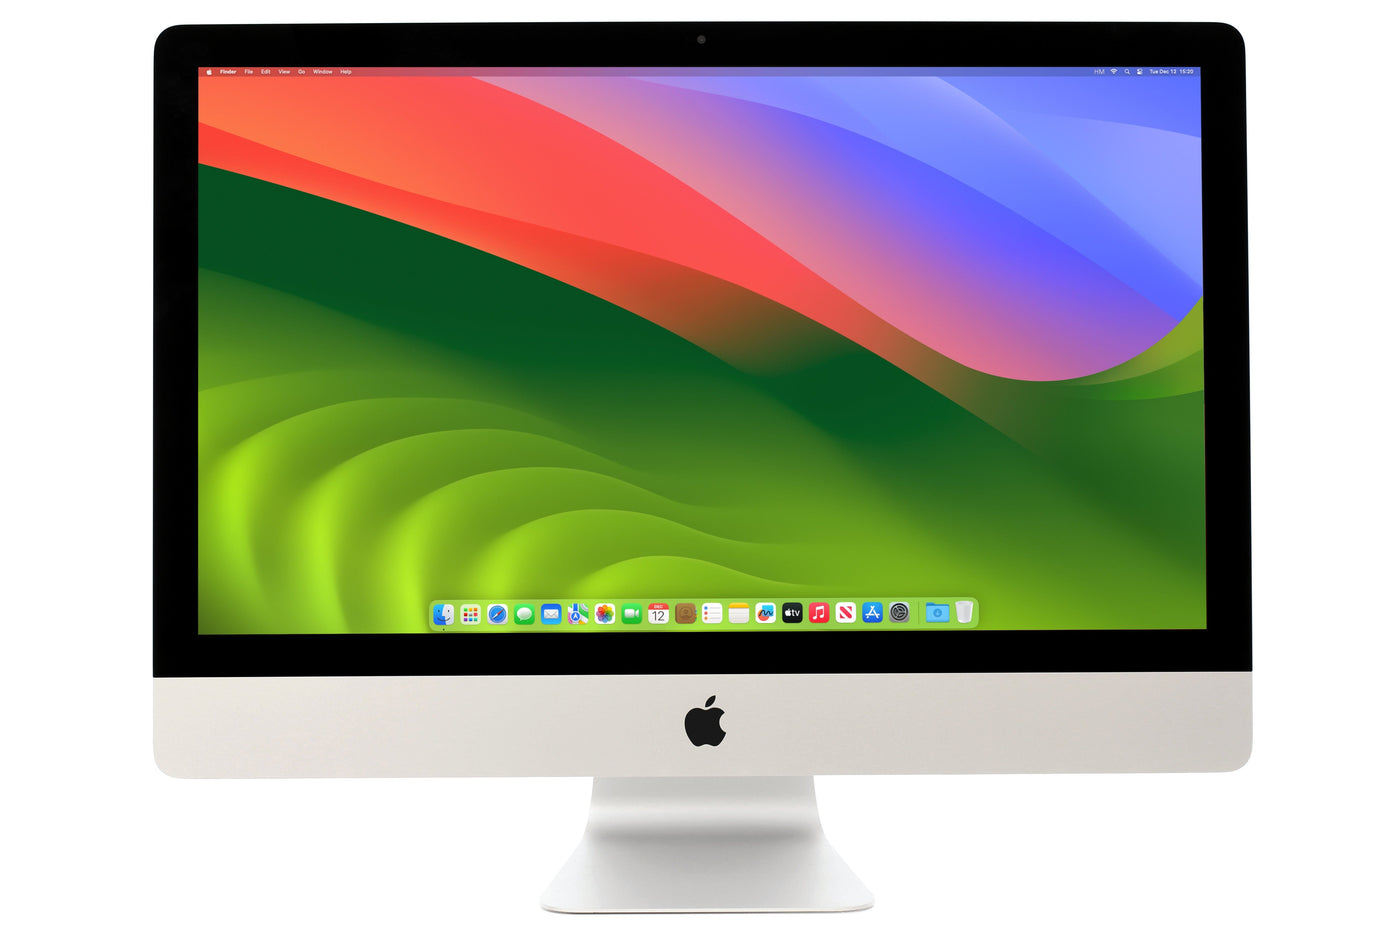 Apple iMac 27-inch iMac 5K Retina 27-inch Core i5 3.3GHz (2020, Nano) - Good